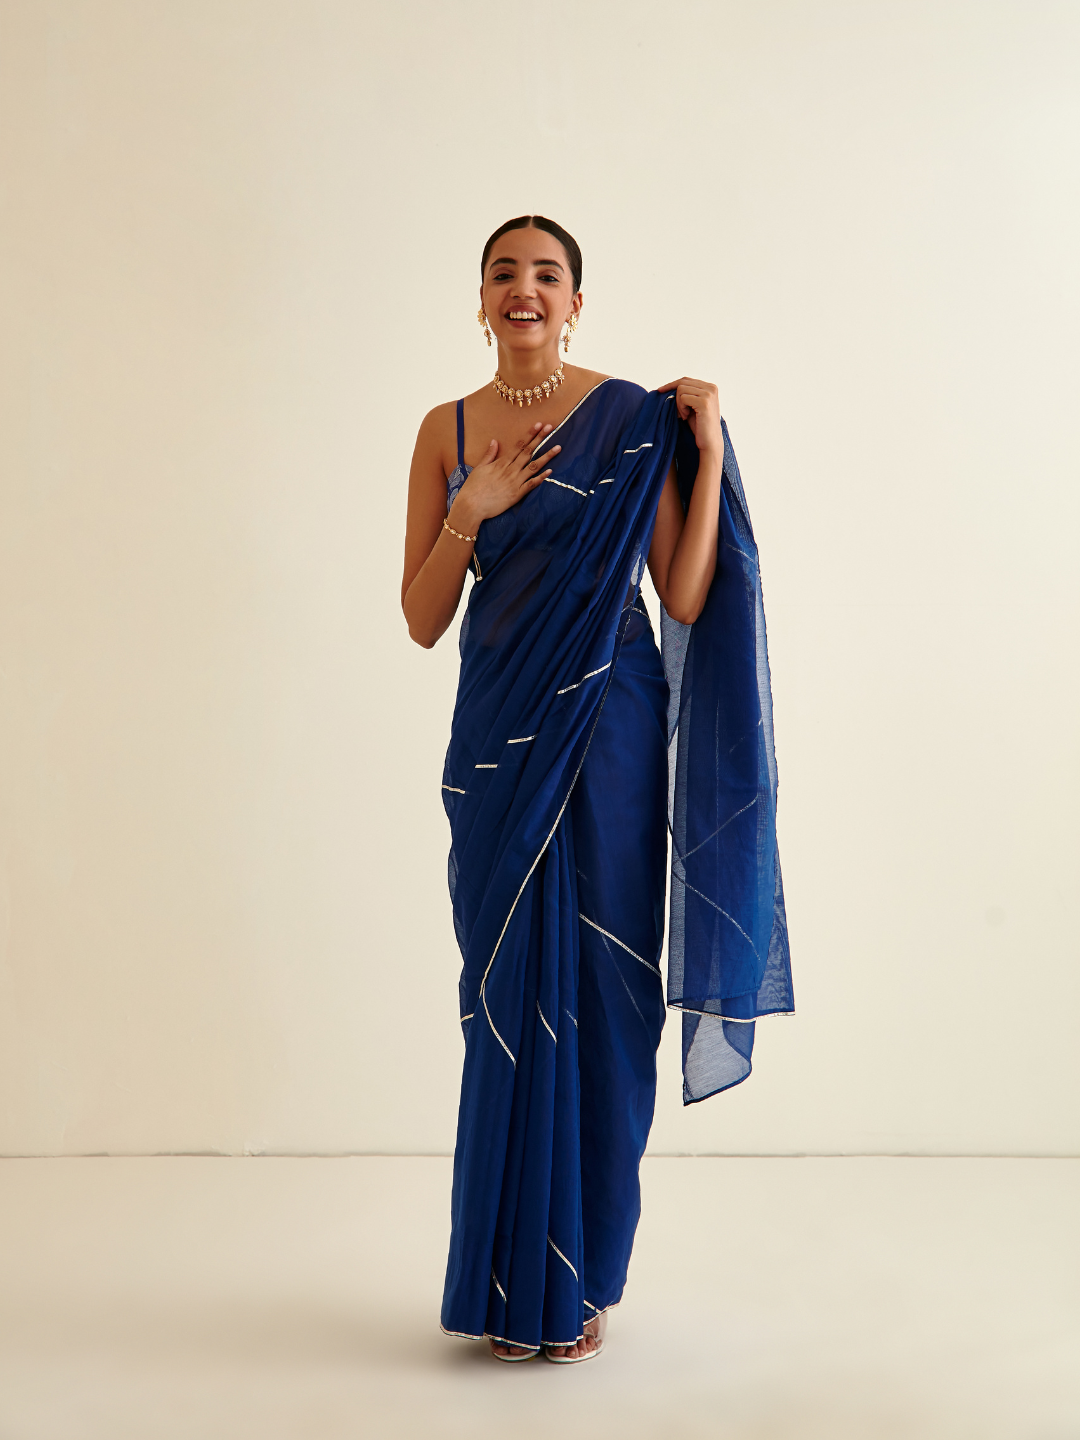 Banarasi woven sari with Gota patti highlights- Admiral Blue